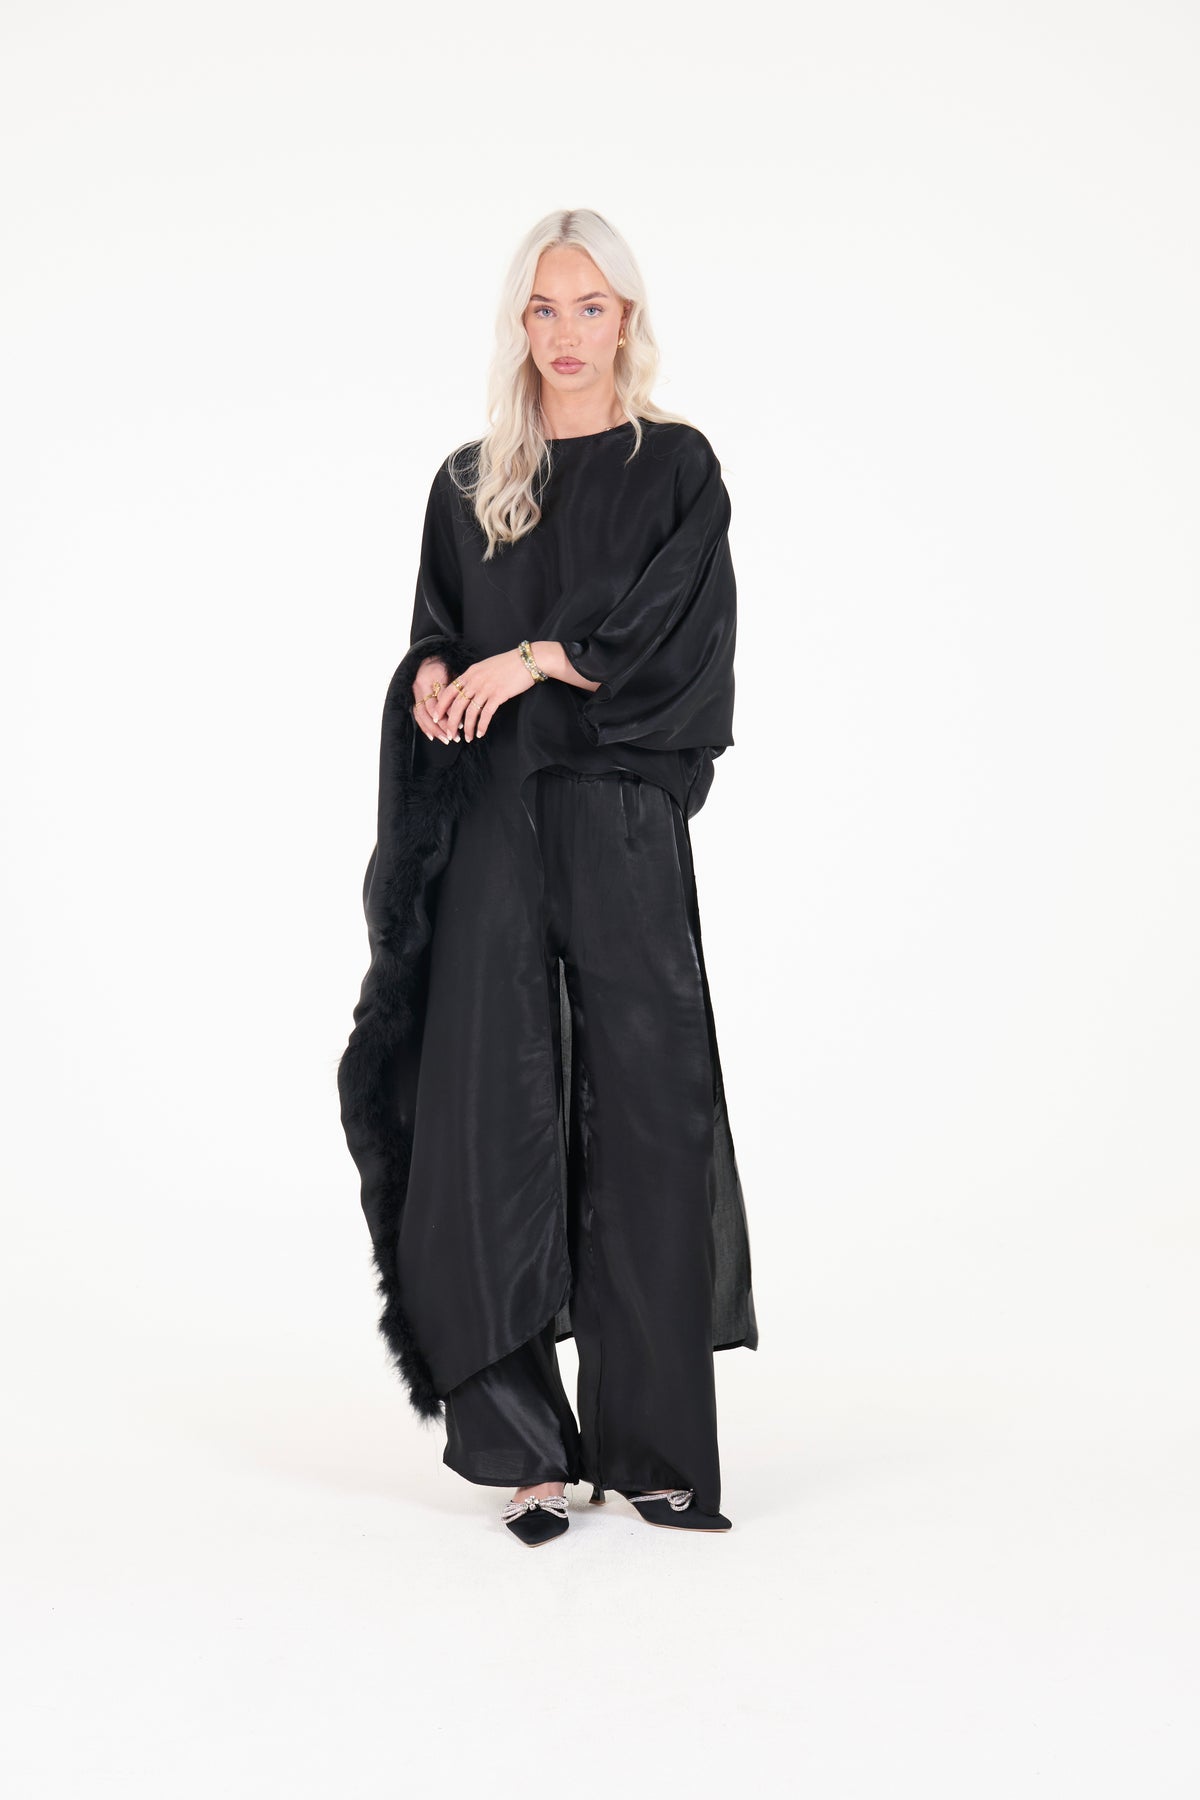 Alyssa Black Set With Fur